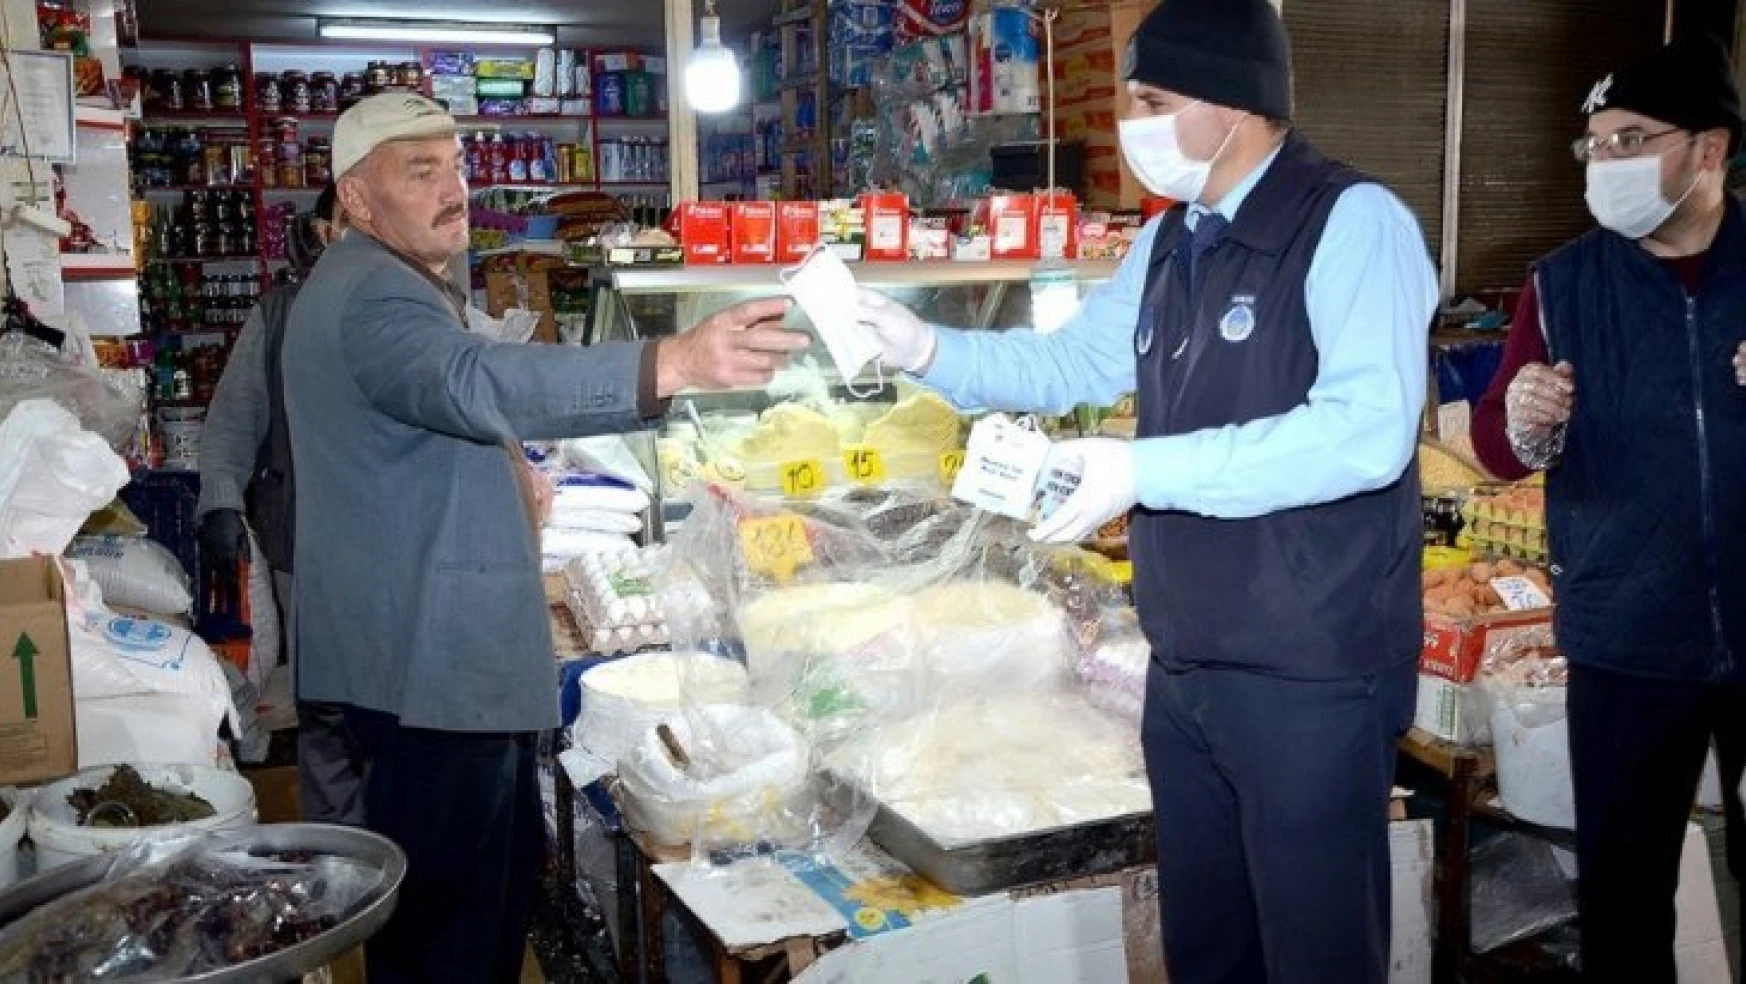 Malatya balık pazarında korona virüs alarmı